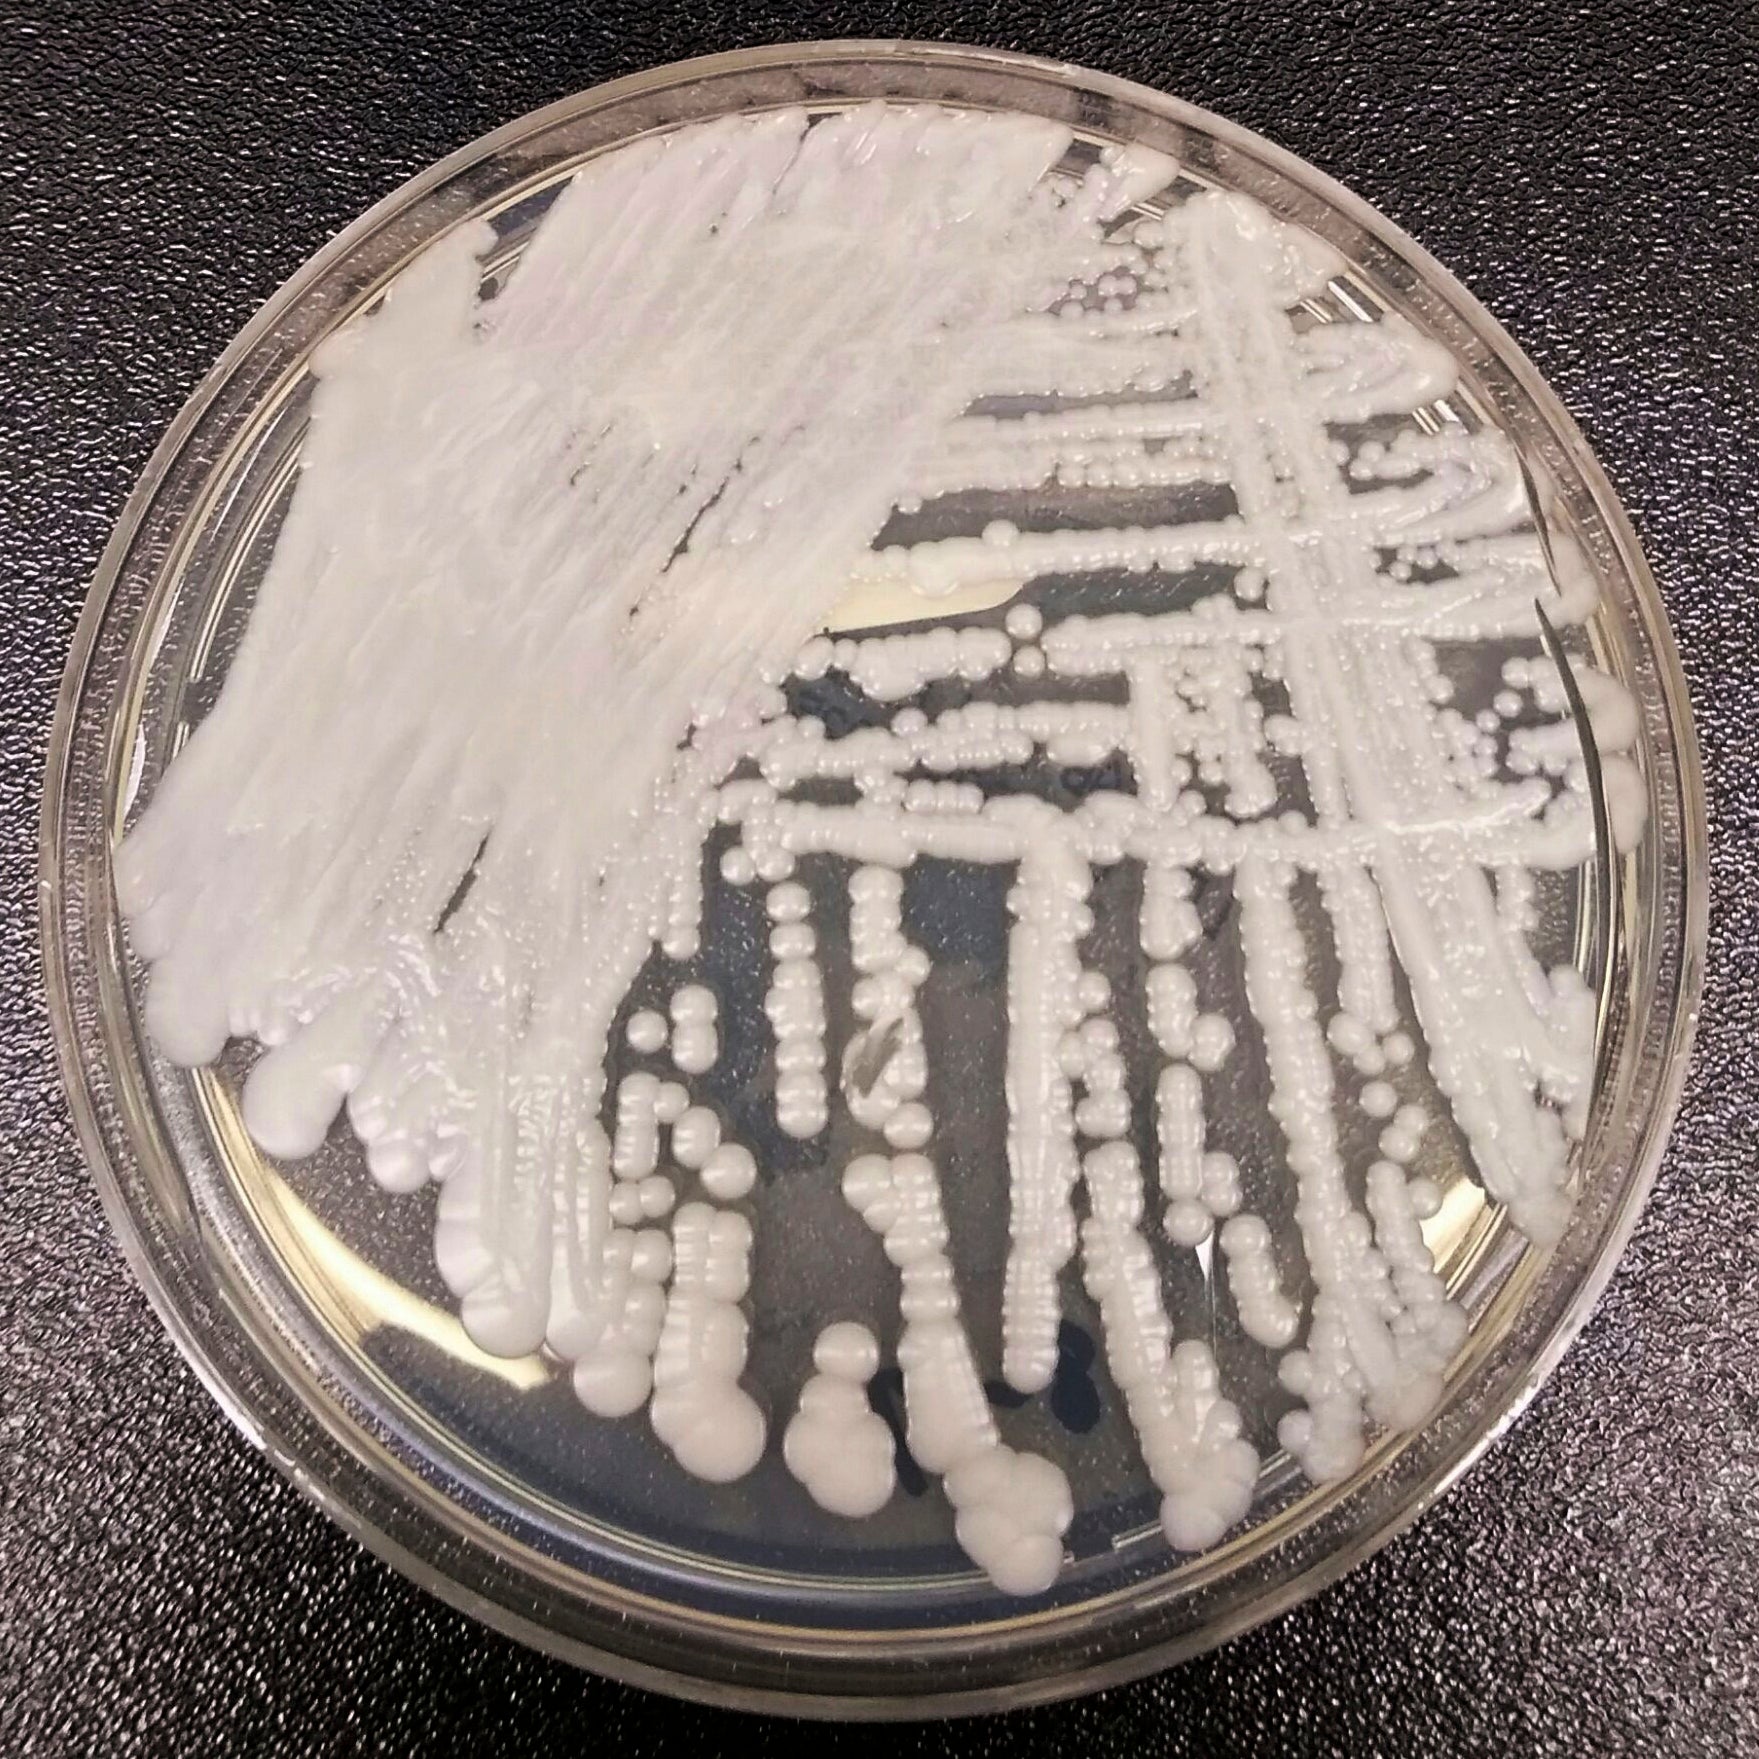 Superbug Fungus